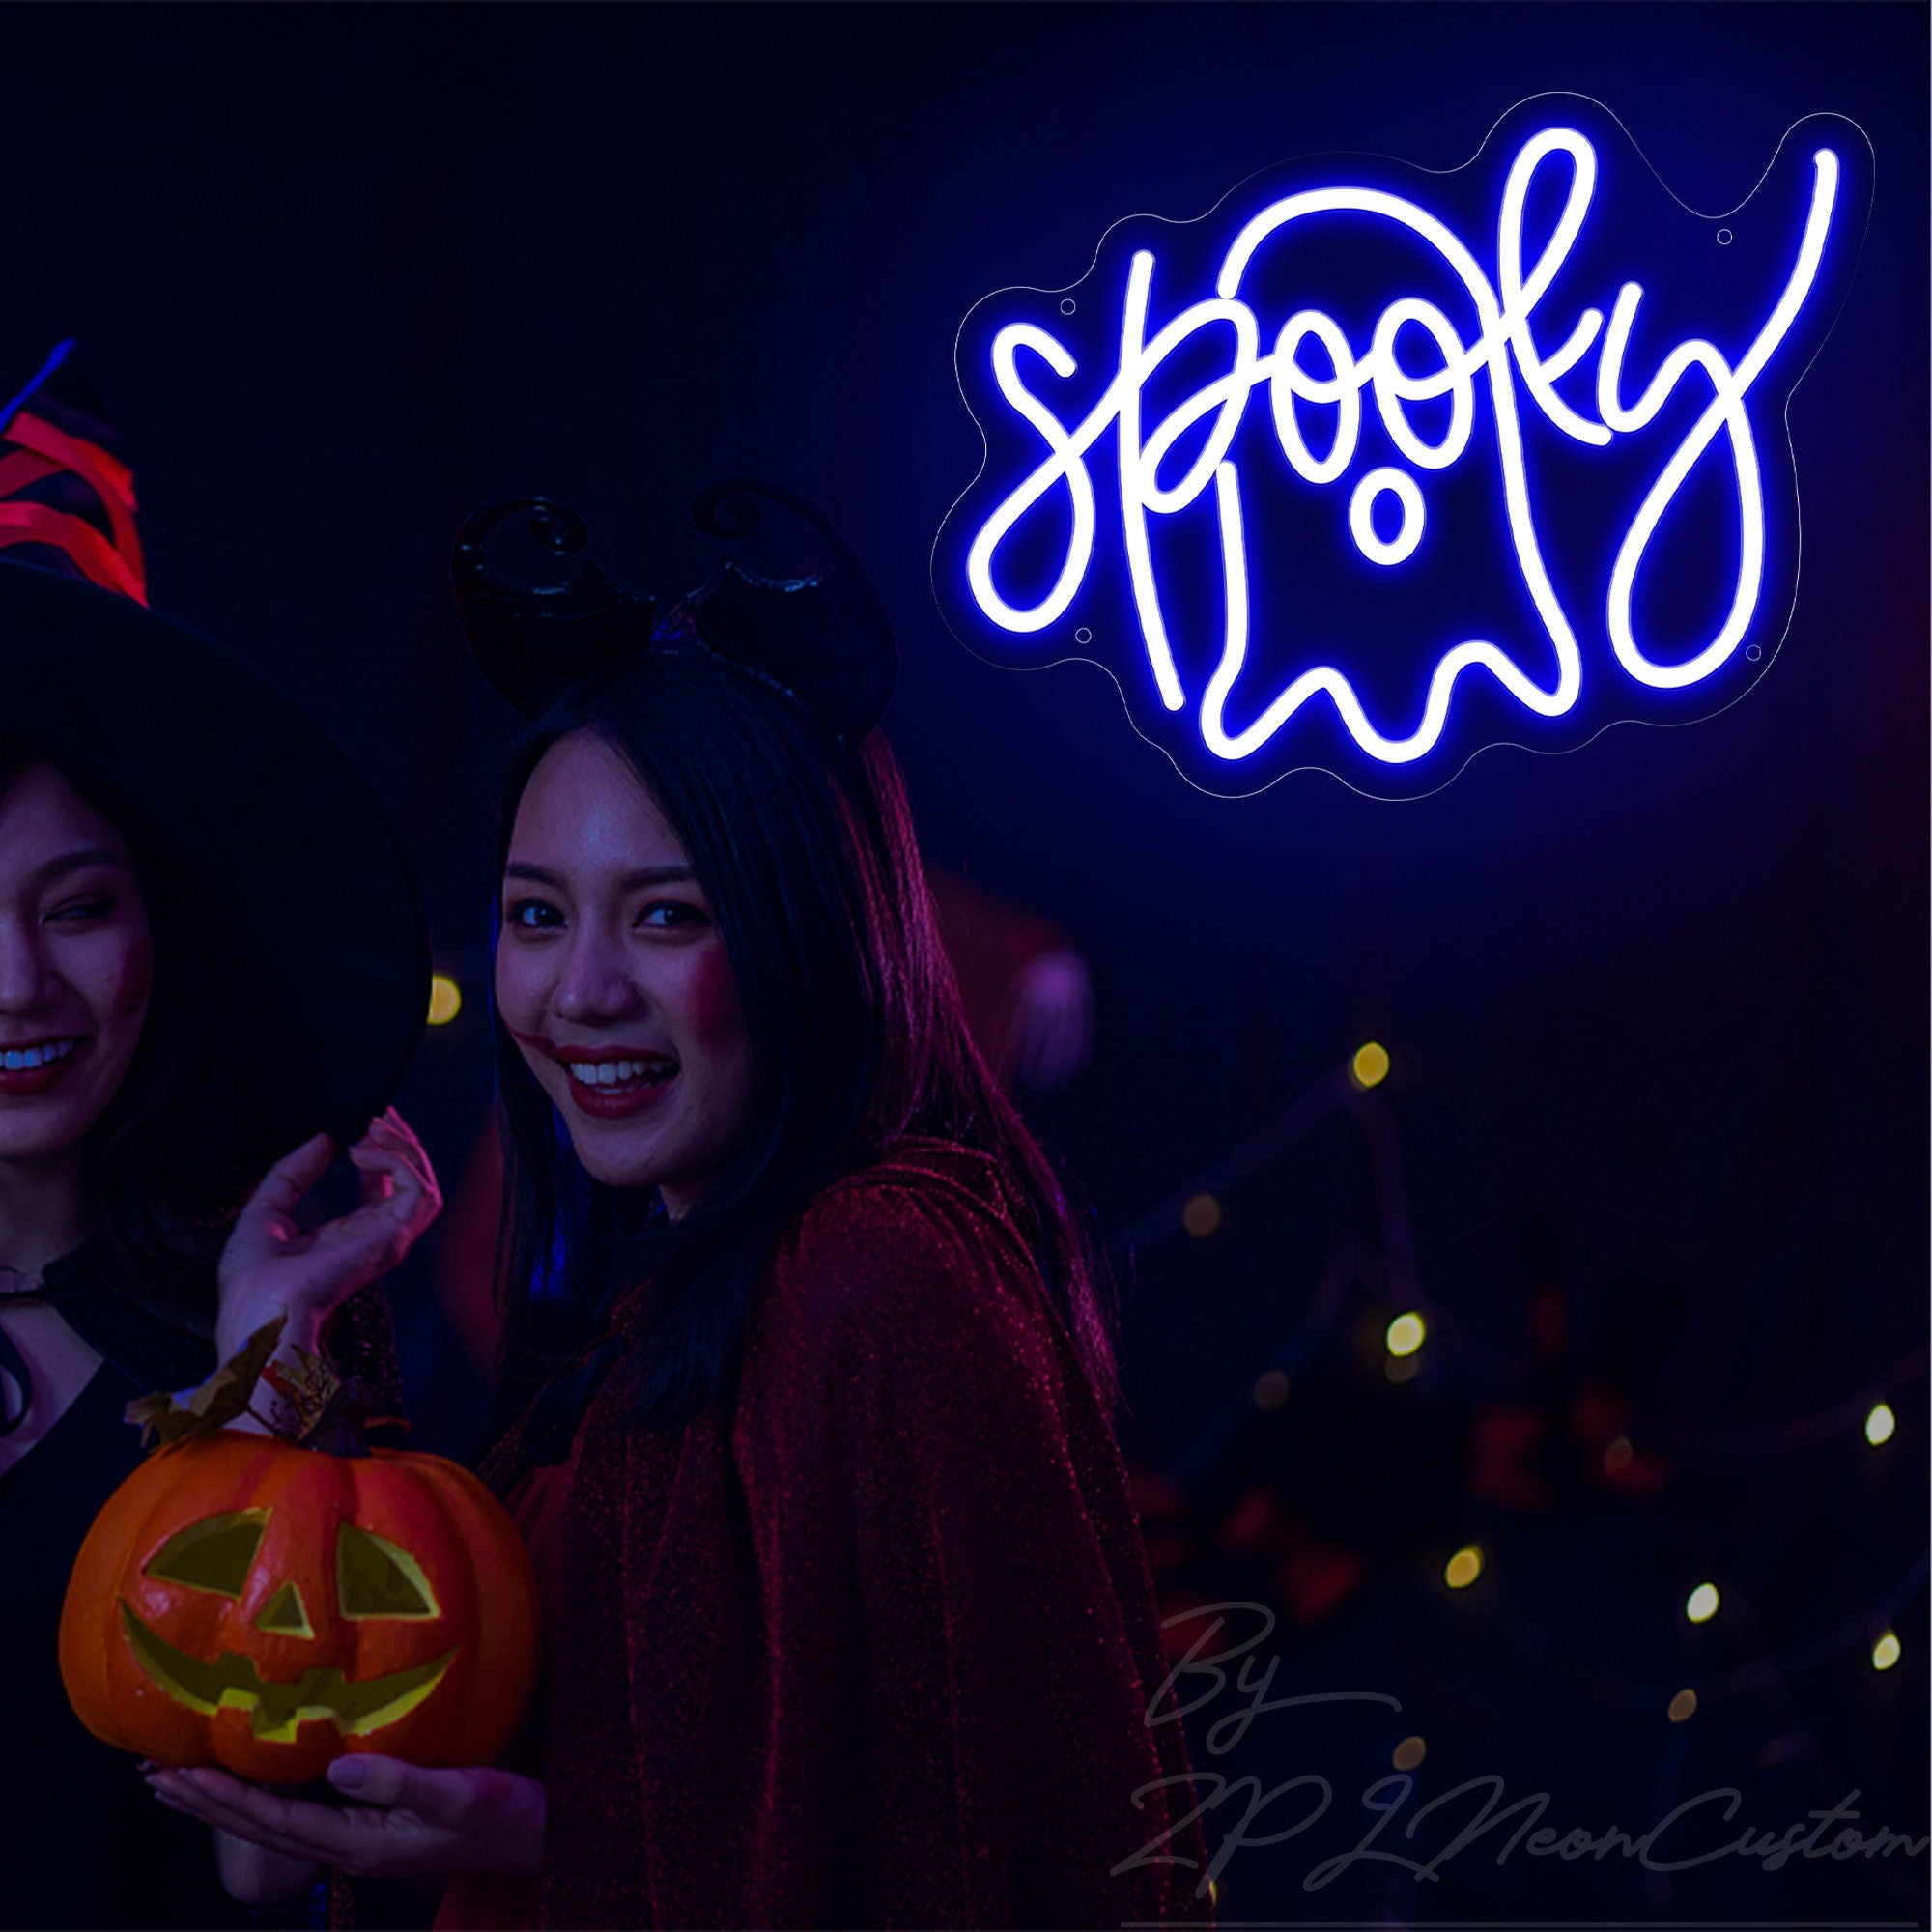 NEONIP-100% Handmade Spooky Ghost Neon Sign Halloween Party Event Decor